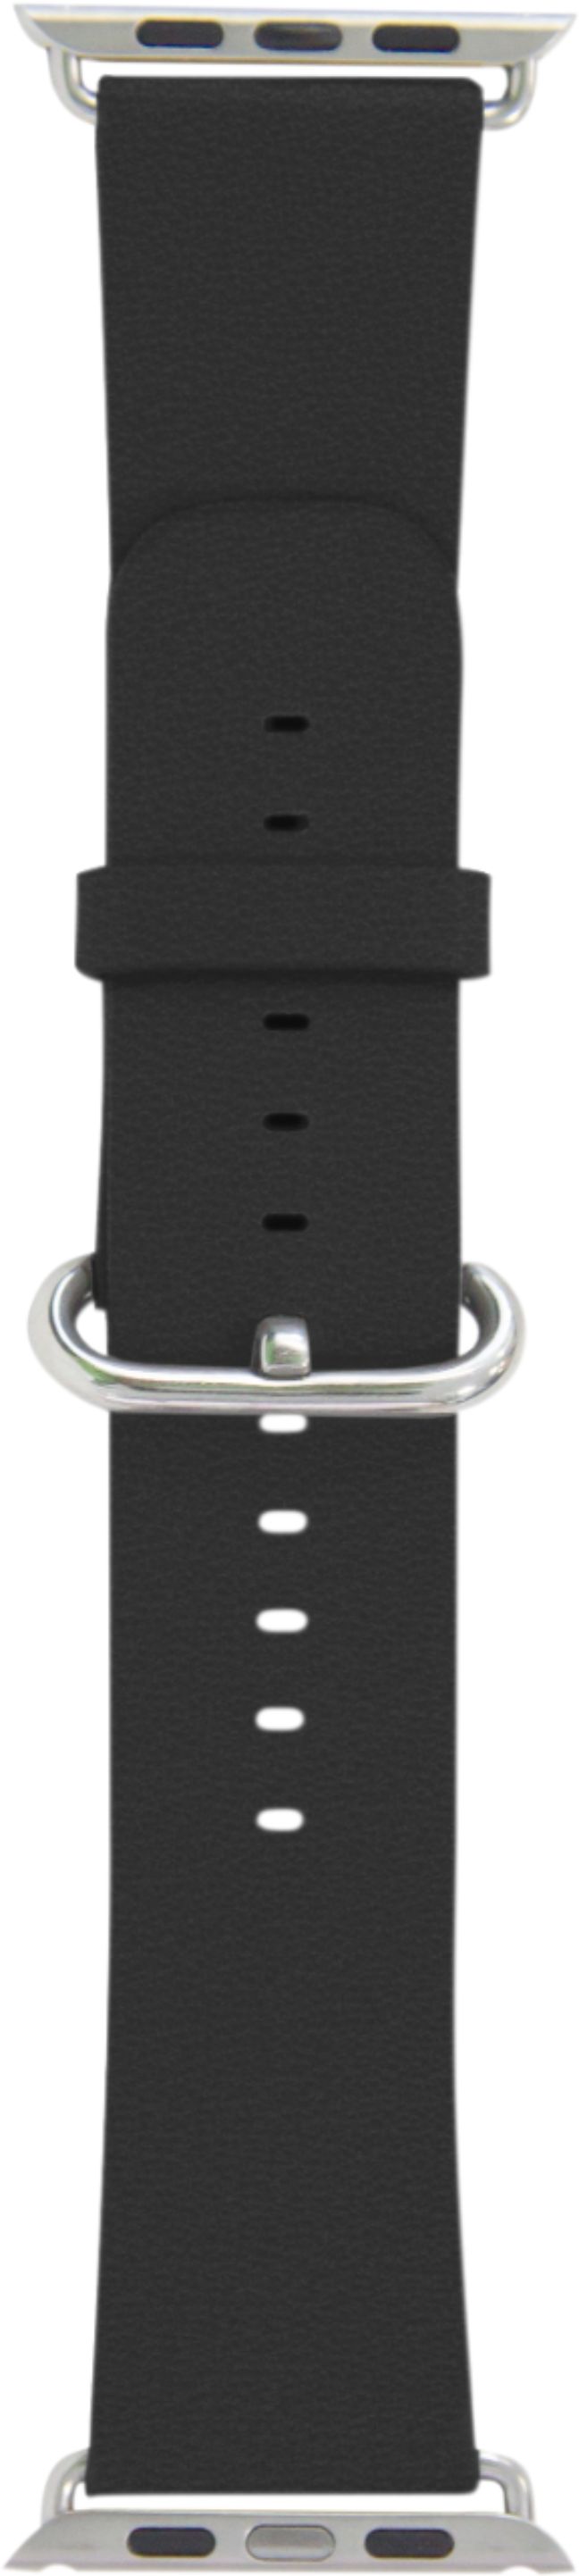 Best Buy: Trident Leather Watch Strap for Apple Watch 42mm Black YBWB4BK